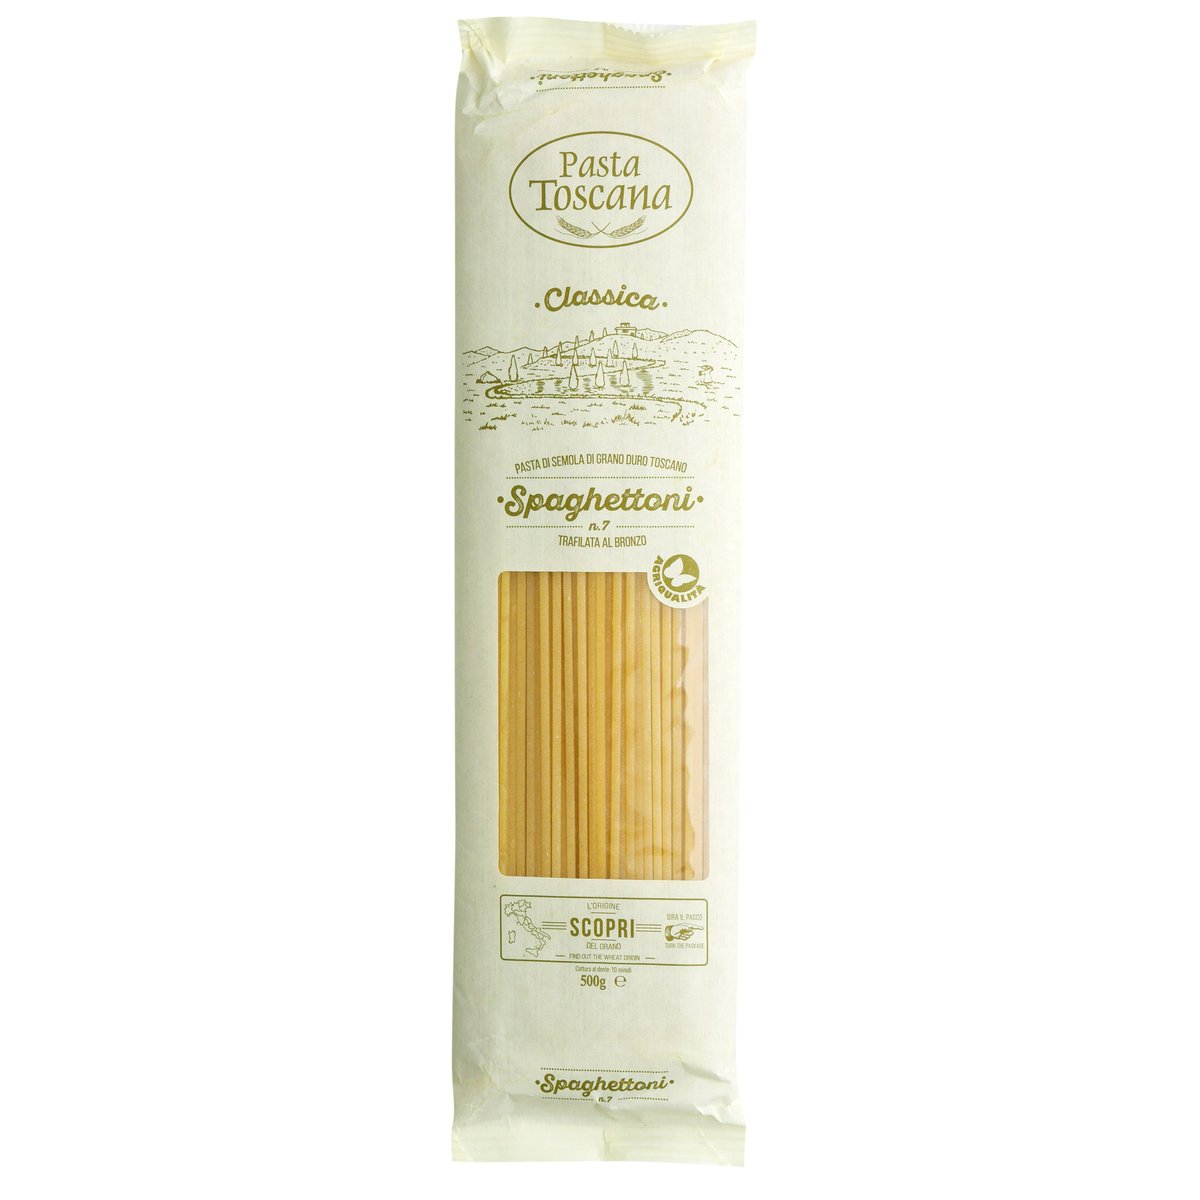 Pasta Toscana Spaghettoni n°7 classica